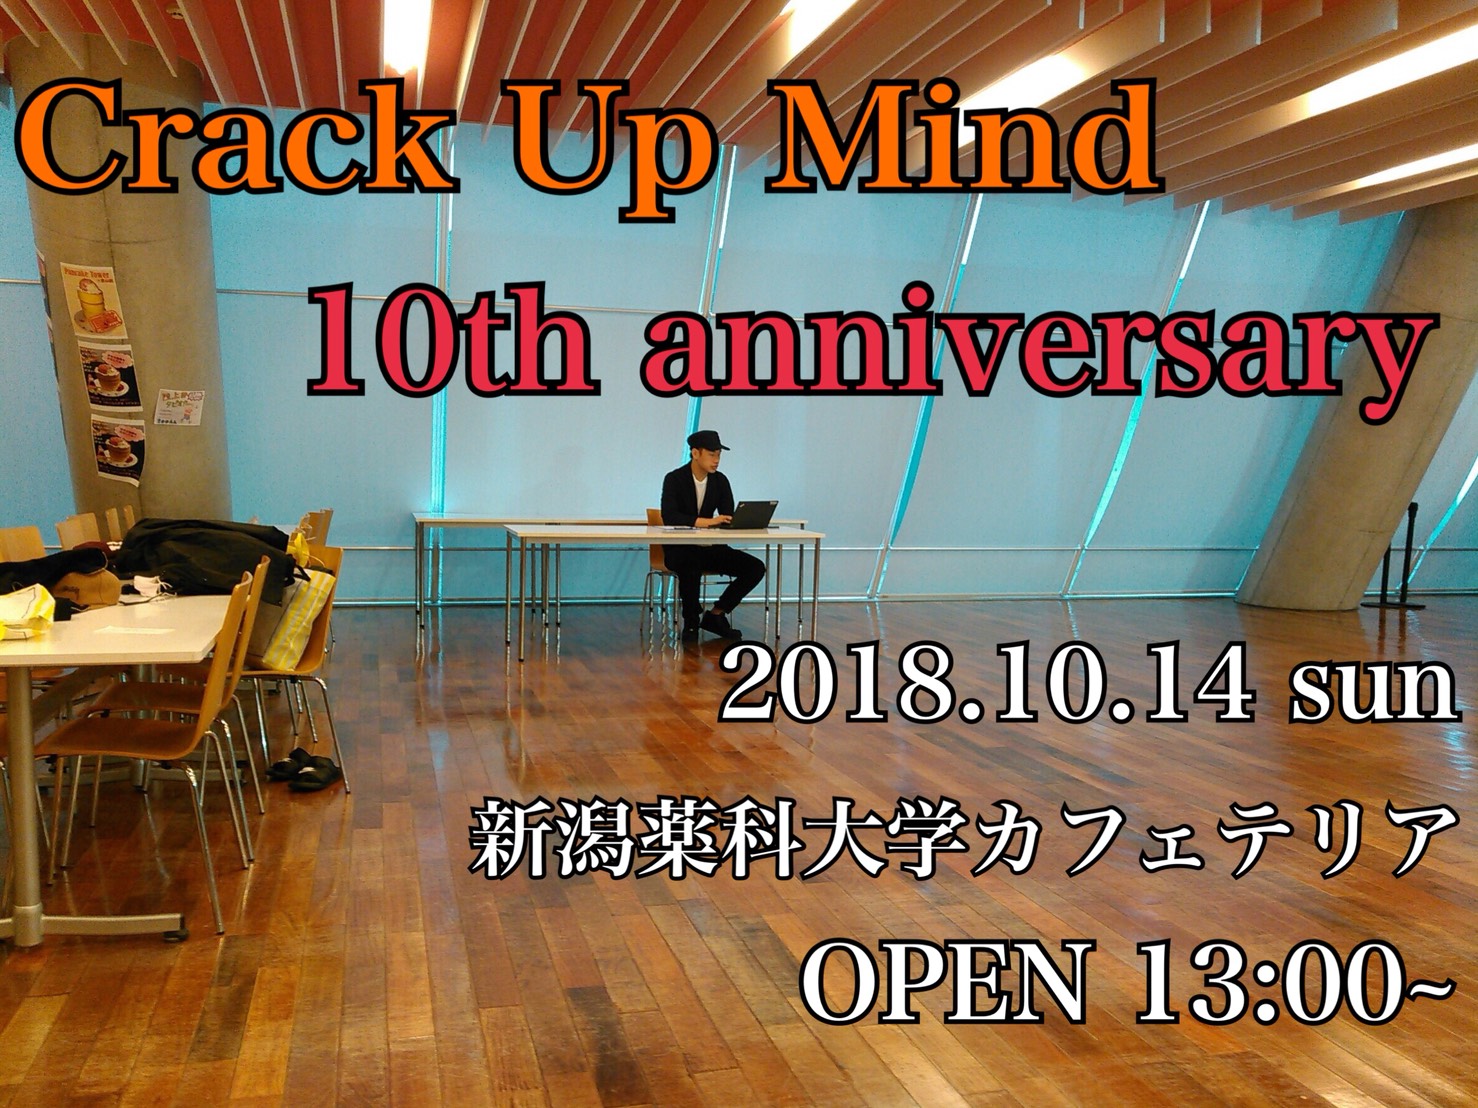 Crack Up Mind 10th anniversary